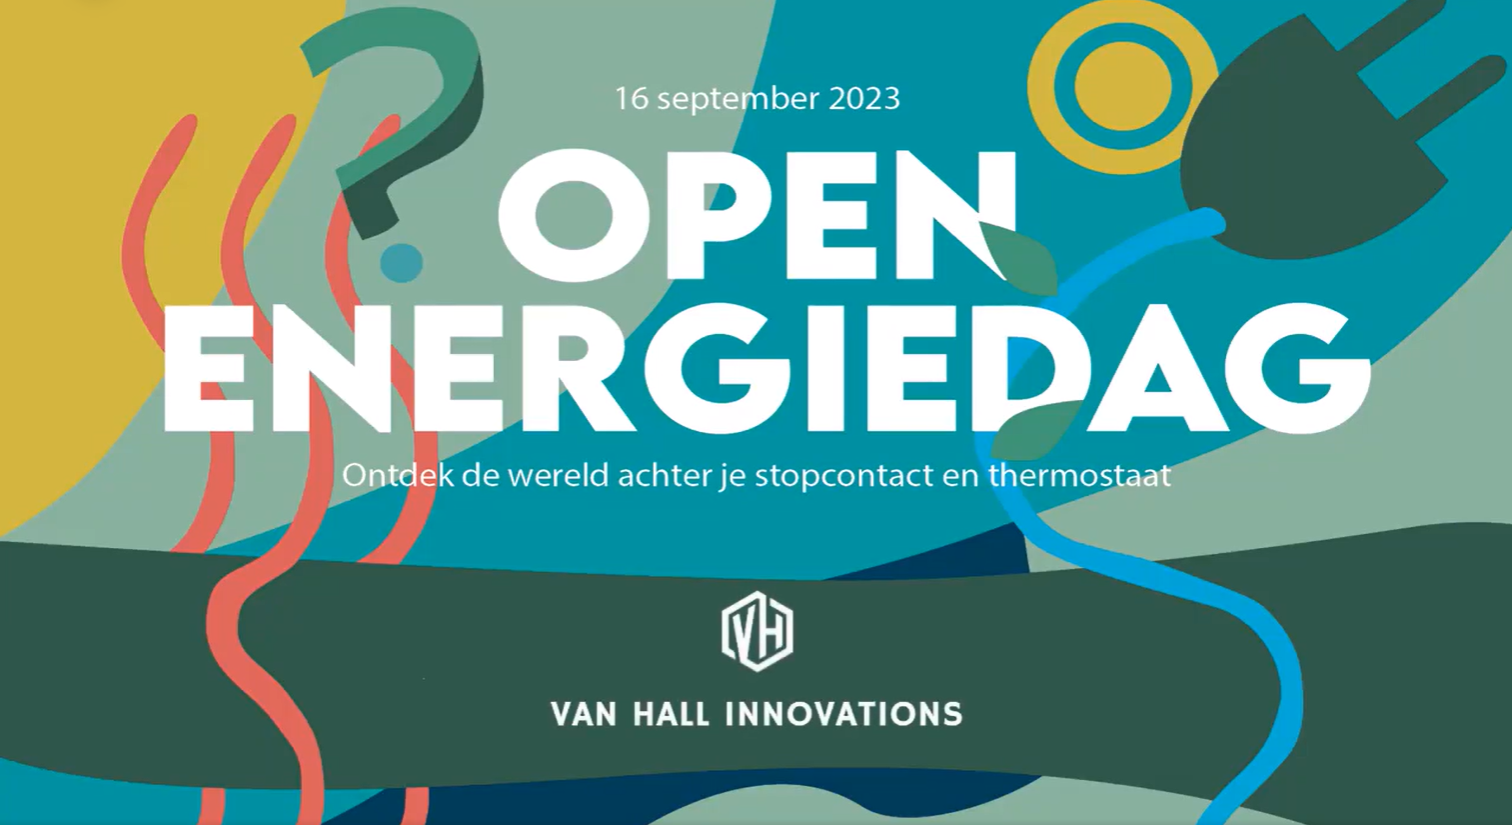 Open energiedag 2023 Van Hall Innovations